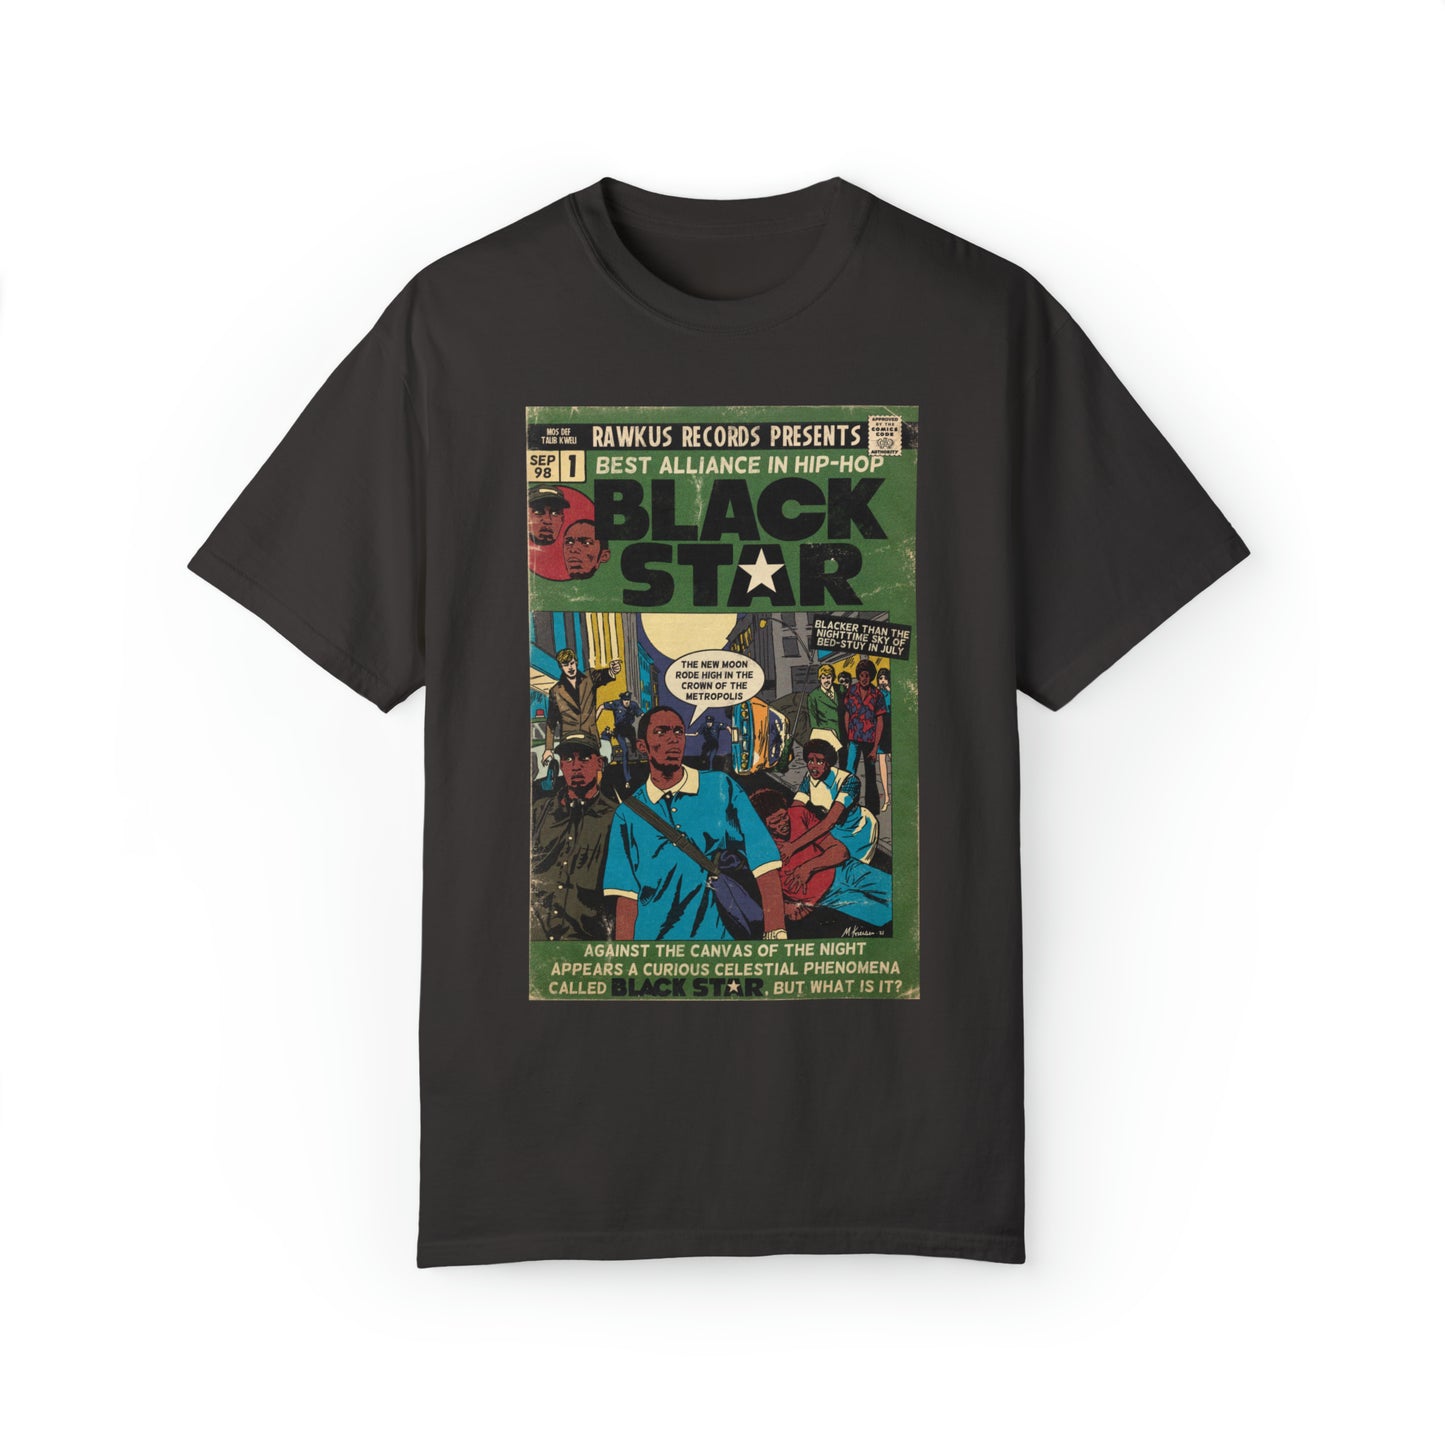 Mos Def & Talib Kweli - Black Star - Unisex Comfort Colors T-shirt